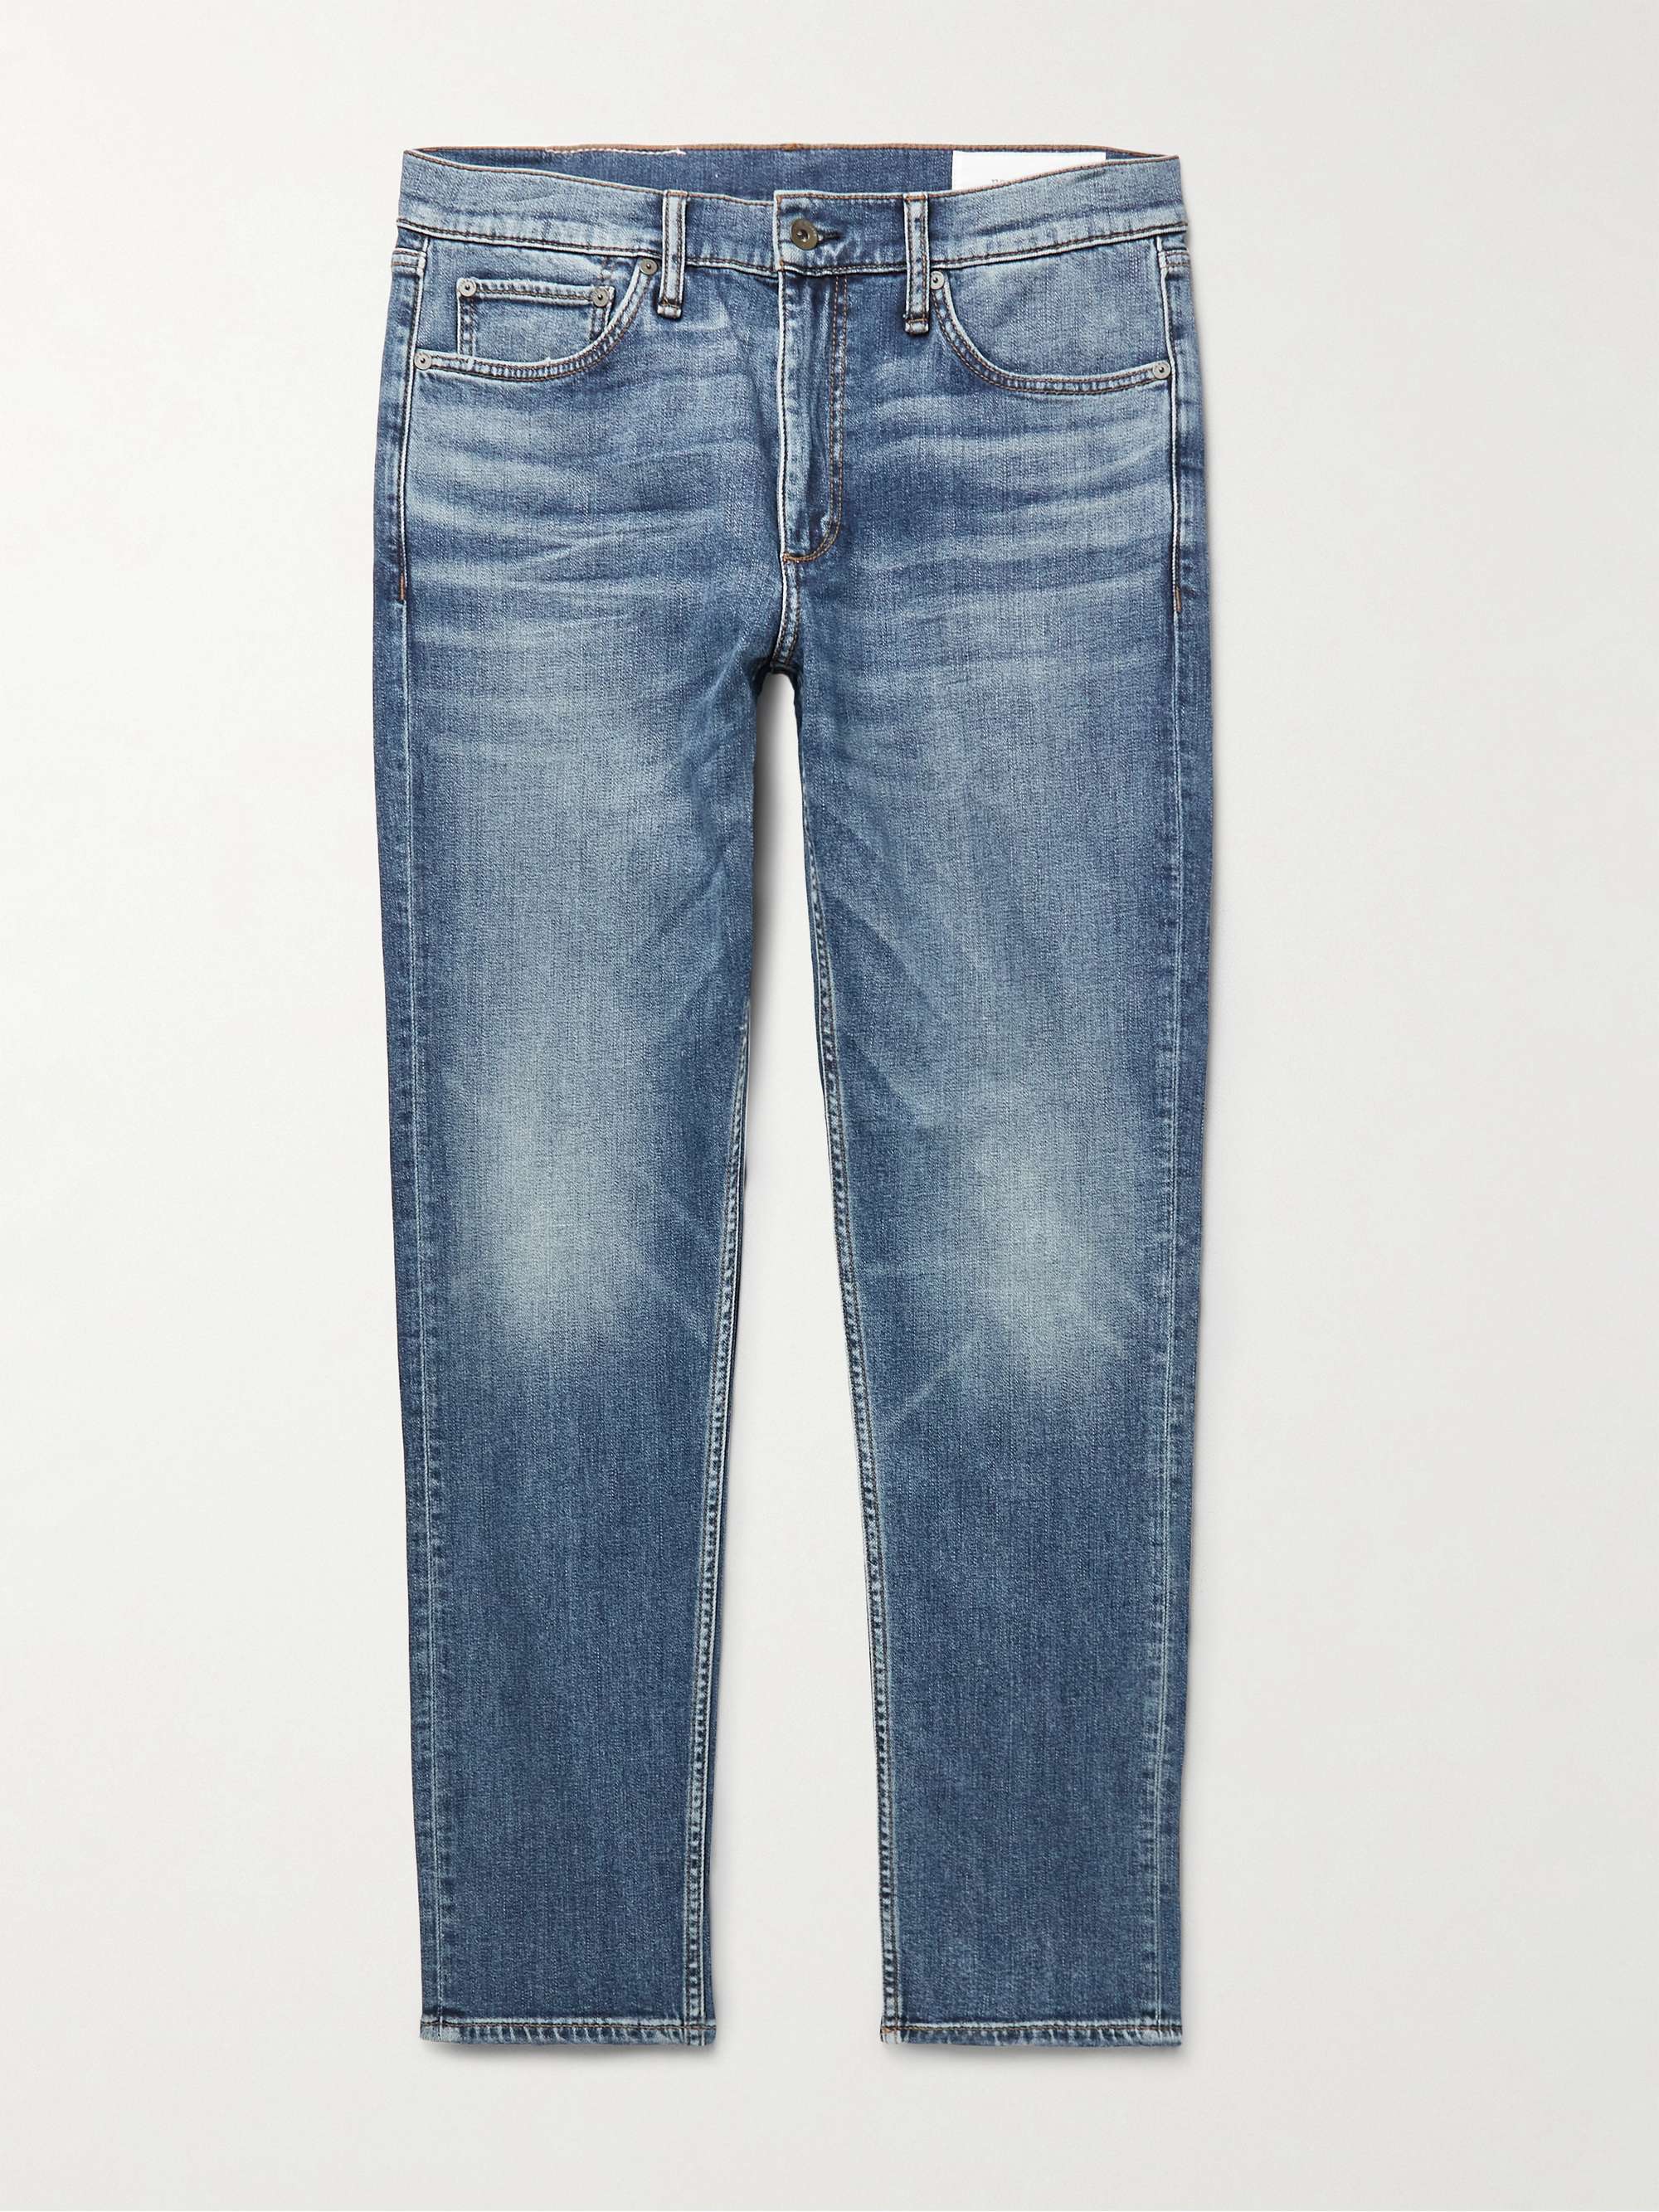 RAG & BONE Fit 2 Slim-Fit Jeans | MR PORTER